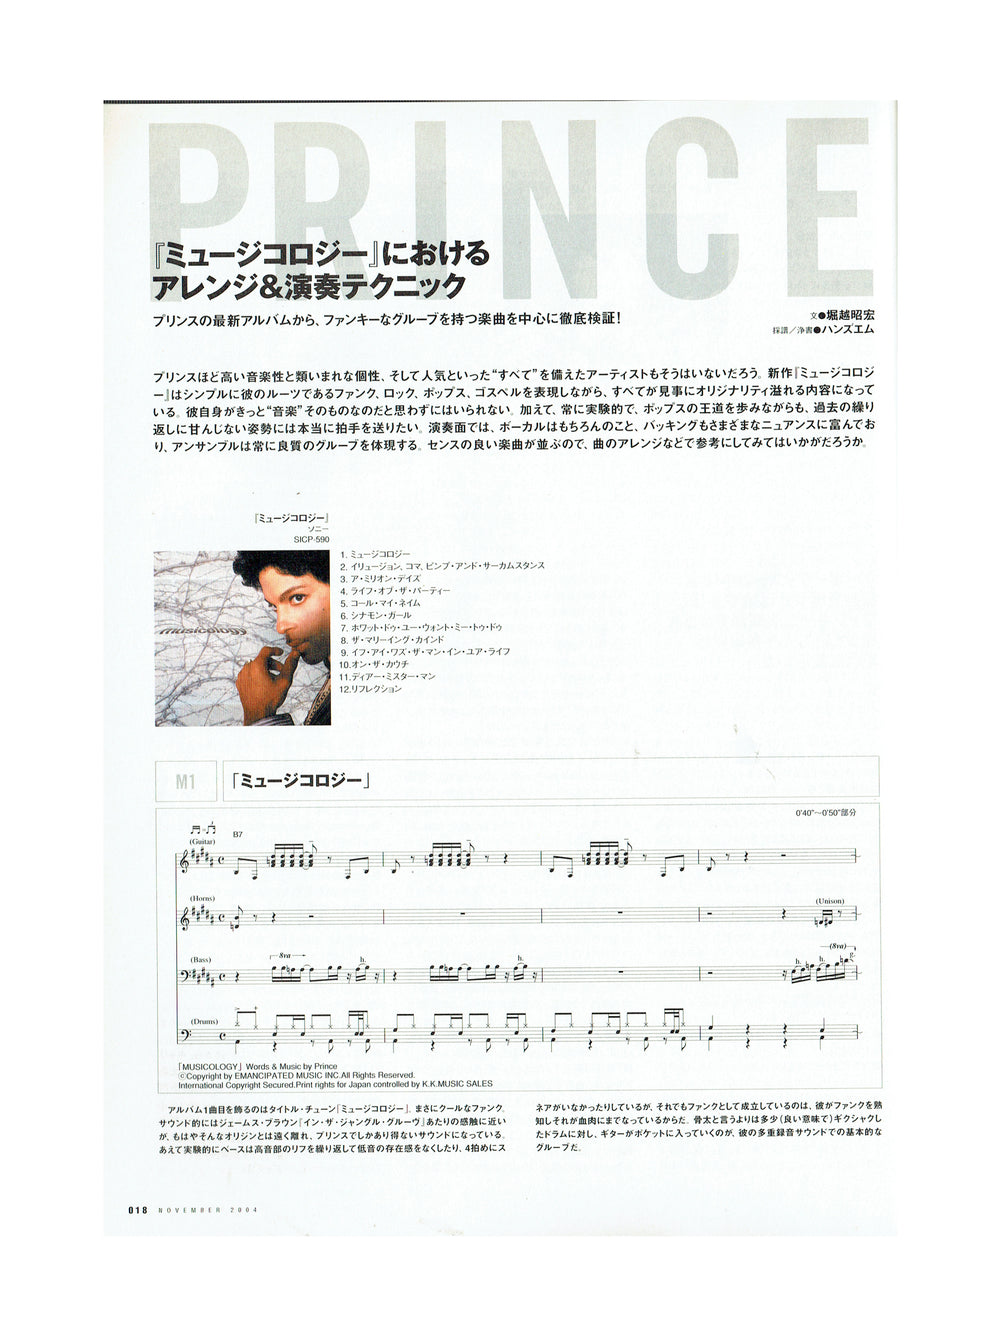 Prince Keyboard Magazine November 2004 Japanese Language & CD